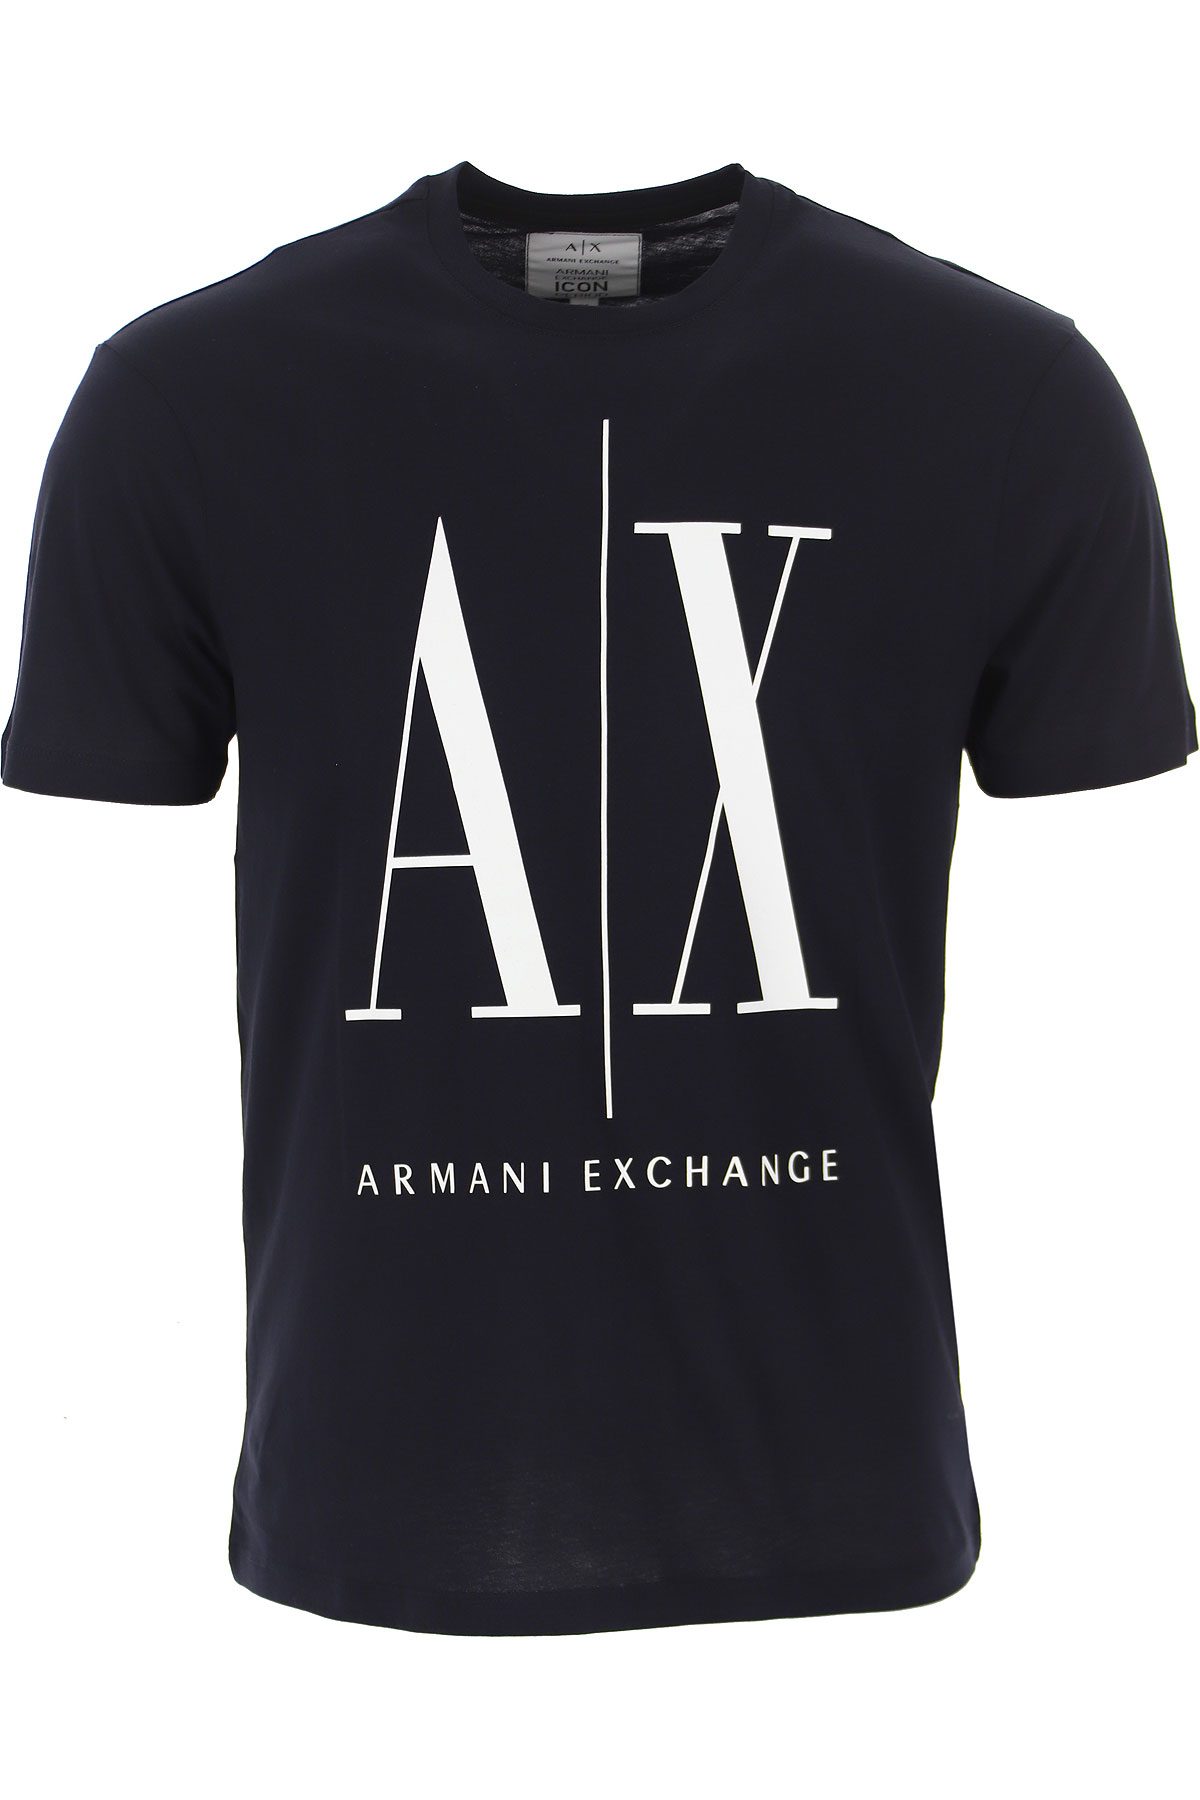 Mens Clothing Armani Exchange, Style code: 8nztpa-zjh4z-1510